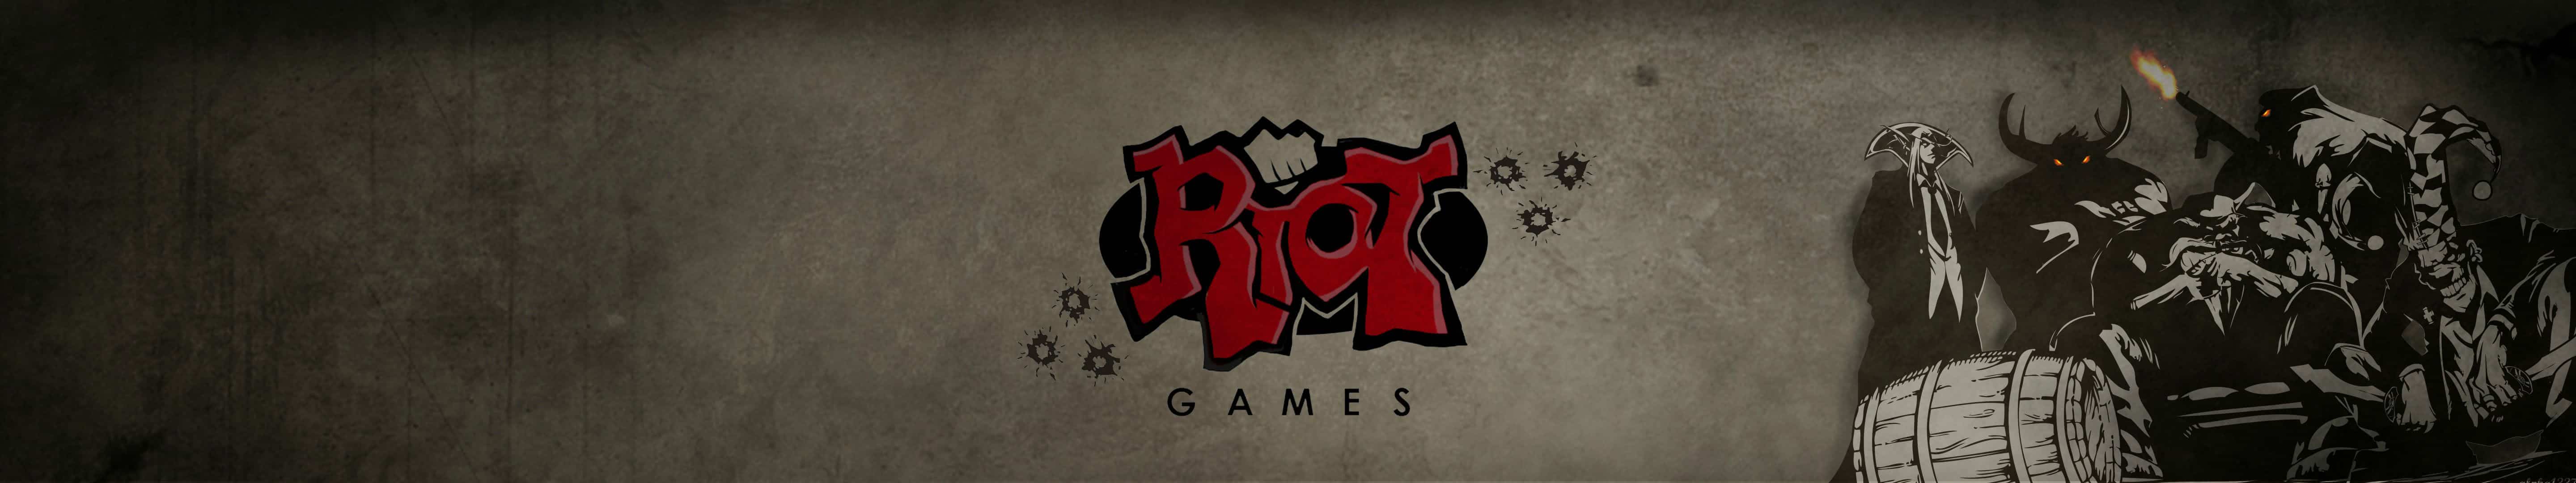 Riot Games Triple Monitor Wallpaper